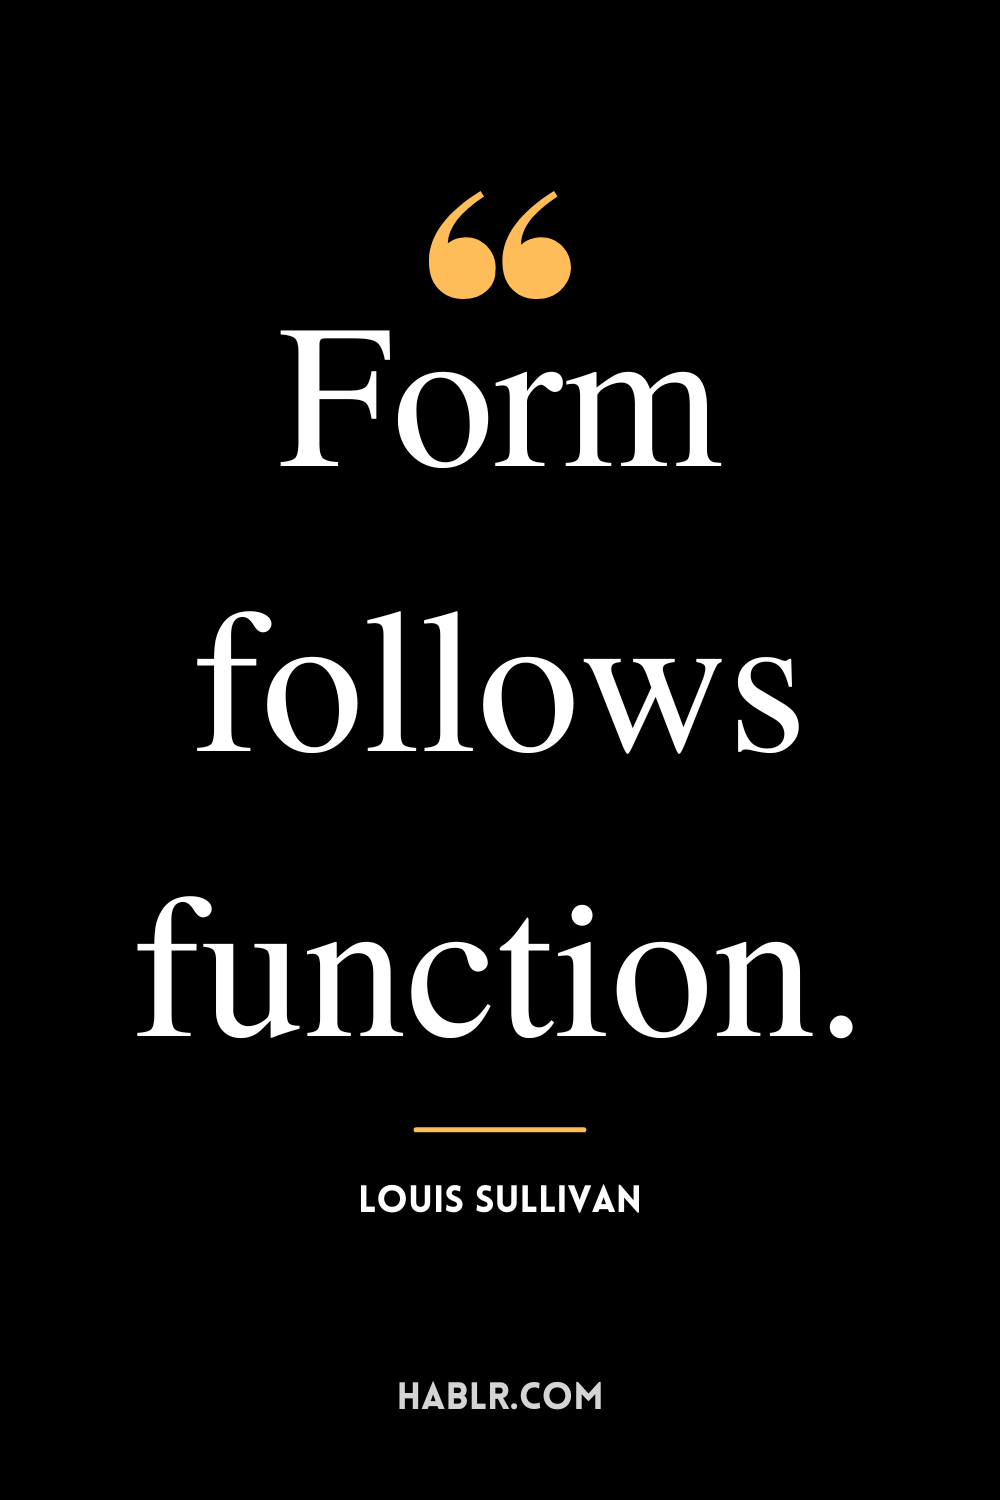 “Form follows function.” -Louis Sullivan